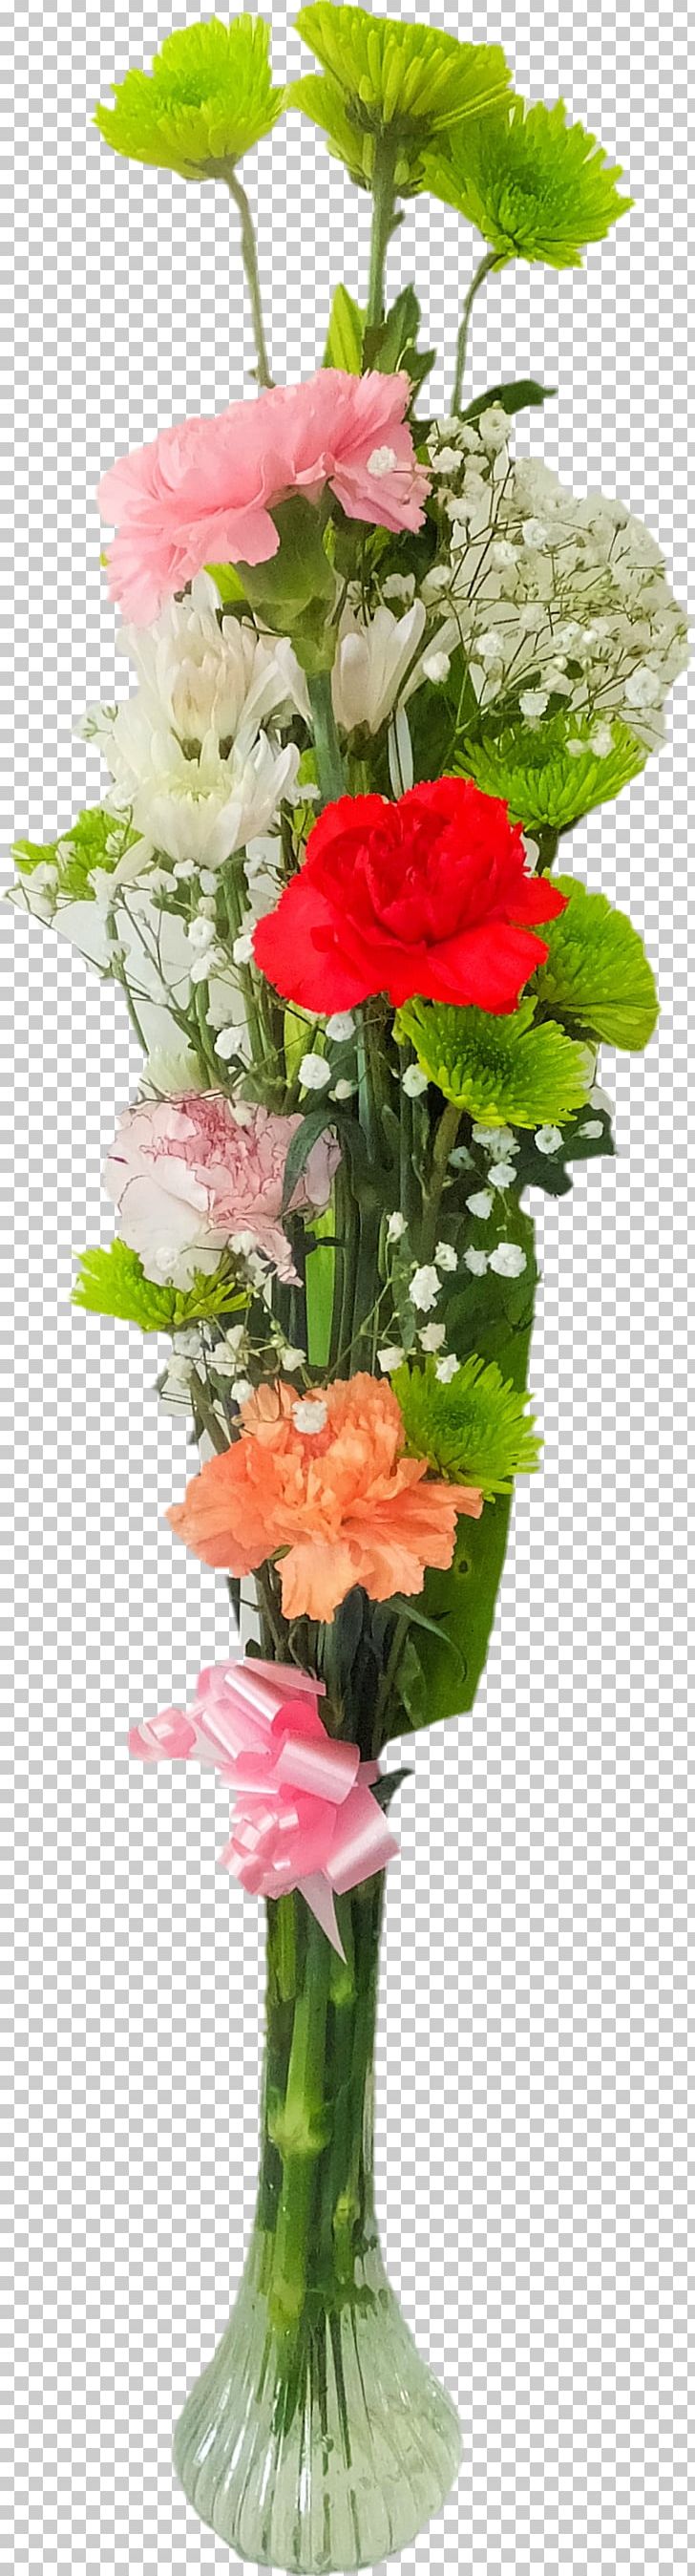 Garden Roses Floral Design Cut Flowers Flower Bouquet PNG, Clipart, Artificial Flower, Cut Flowers, Family, Floral Design, Floristry Free PNG Download